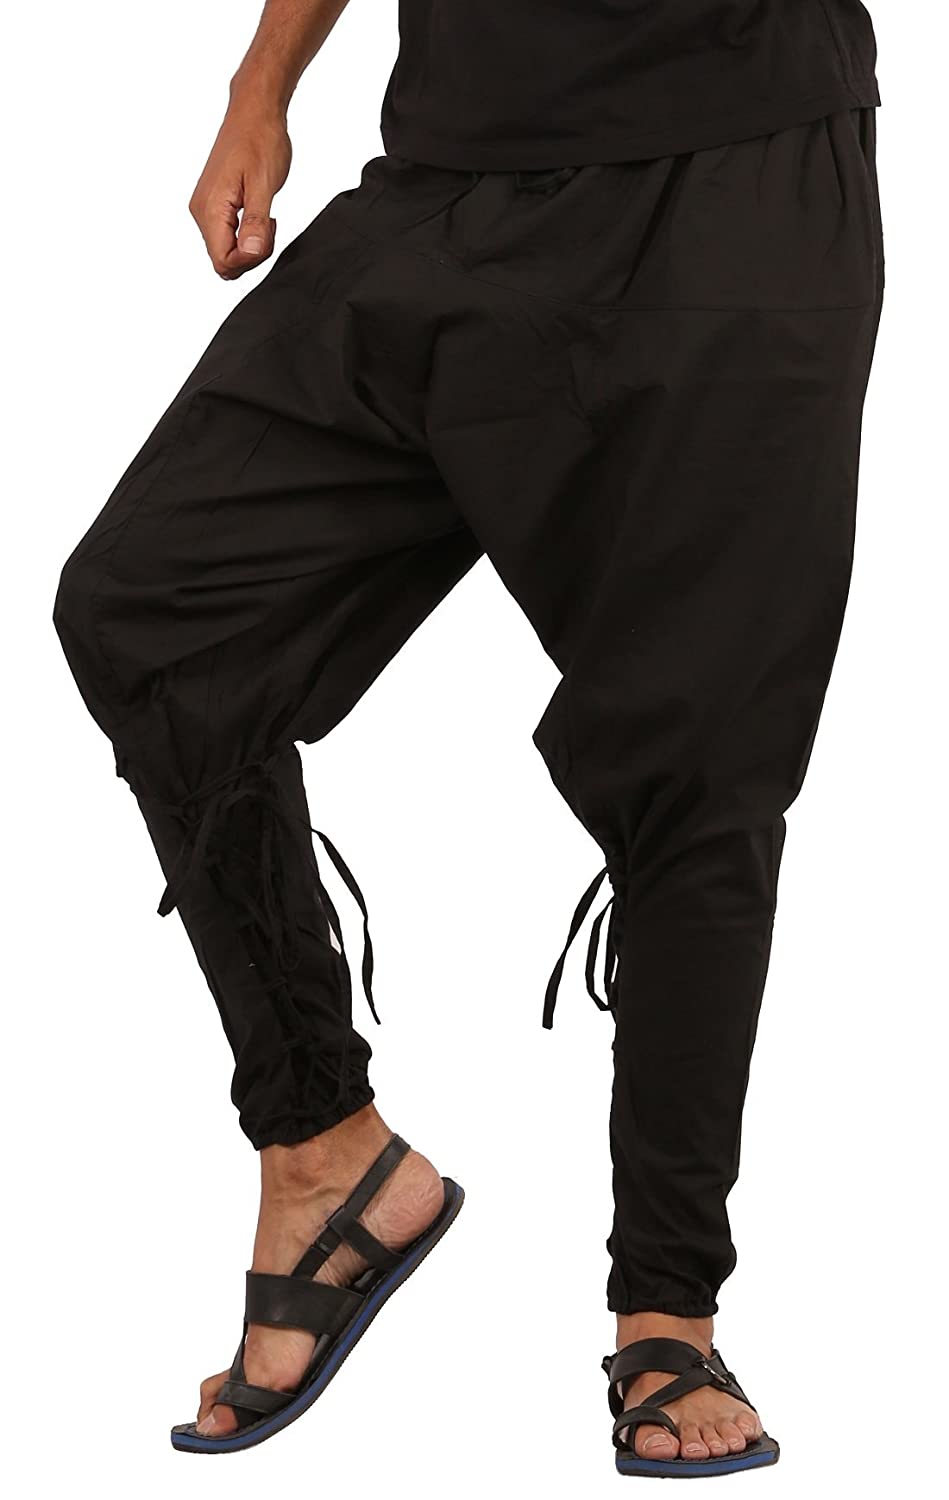 CandyHusky 100% Cotton Hippie Gypsy Boho Baggy Pants Harem Pants for Men  Women Yoga Pants Aladdin Pants One Size Fits Most Black